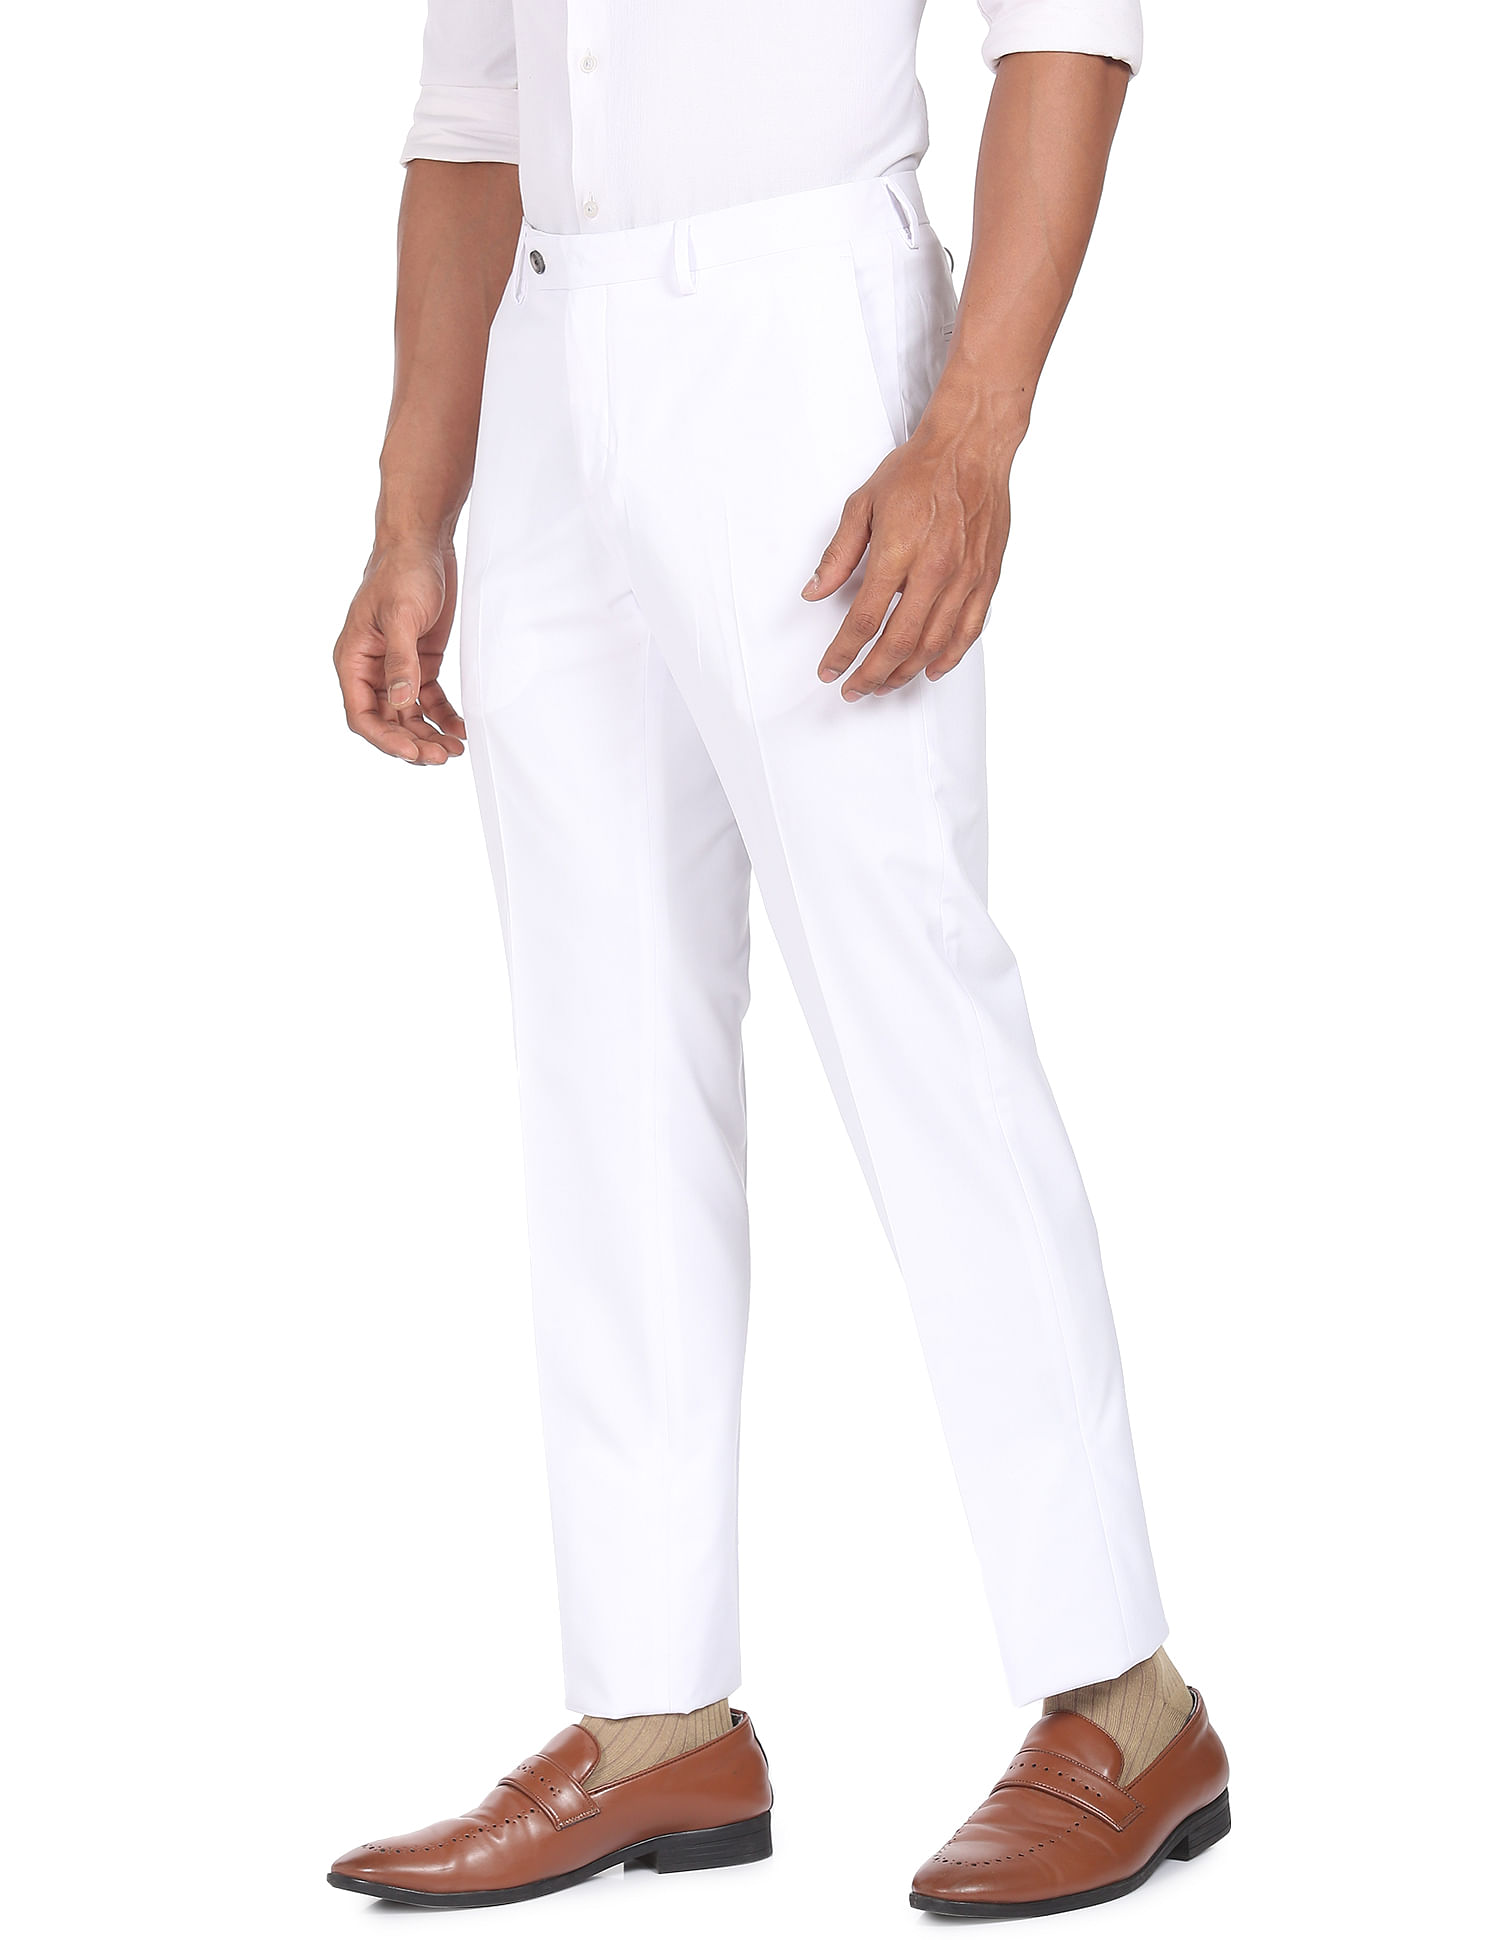 Buy Inspire White Slim Fit Formal Trouser for Men (30) at Amazon.in